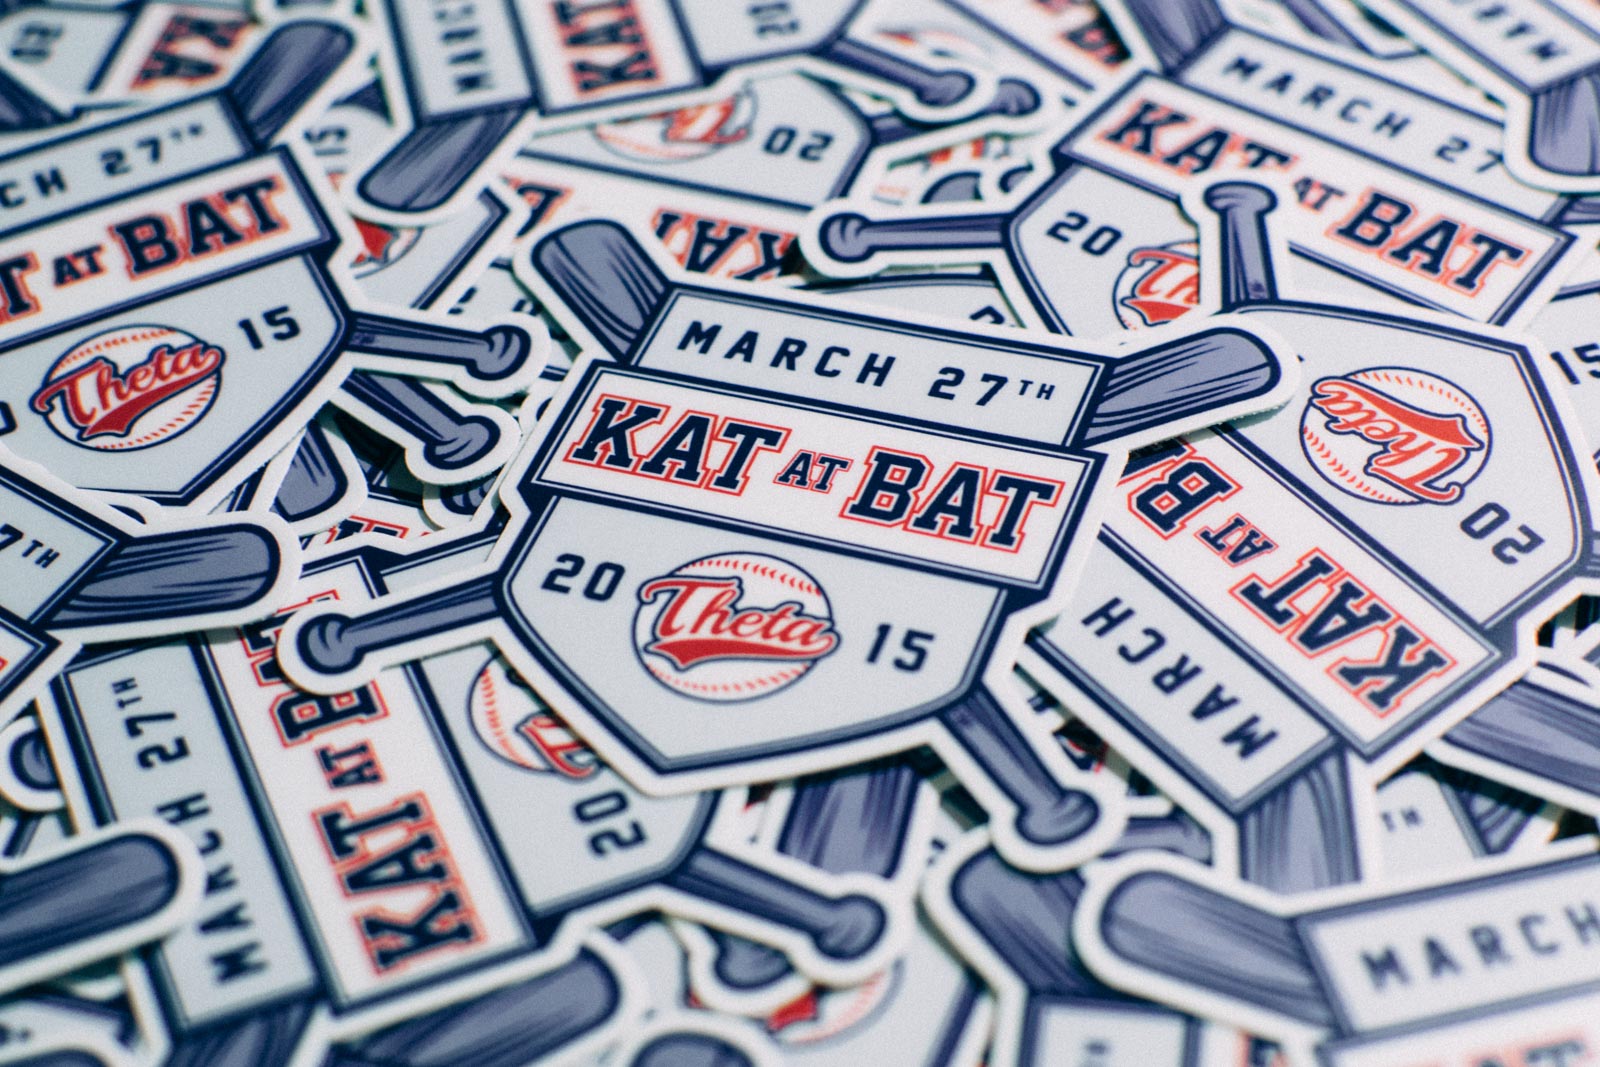 KAT at Bat stickers